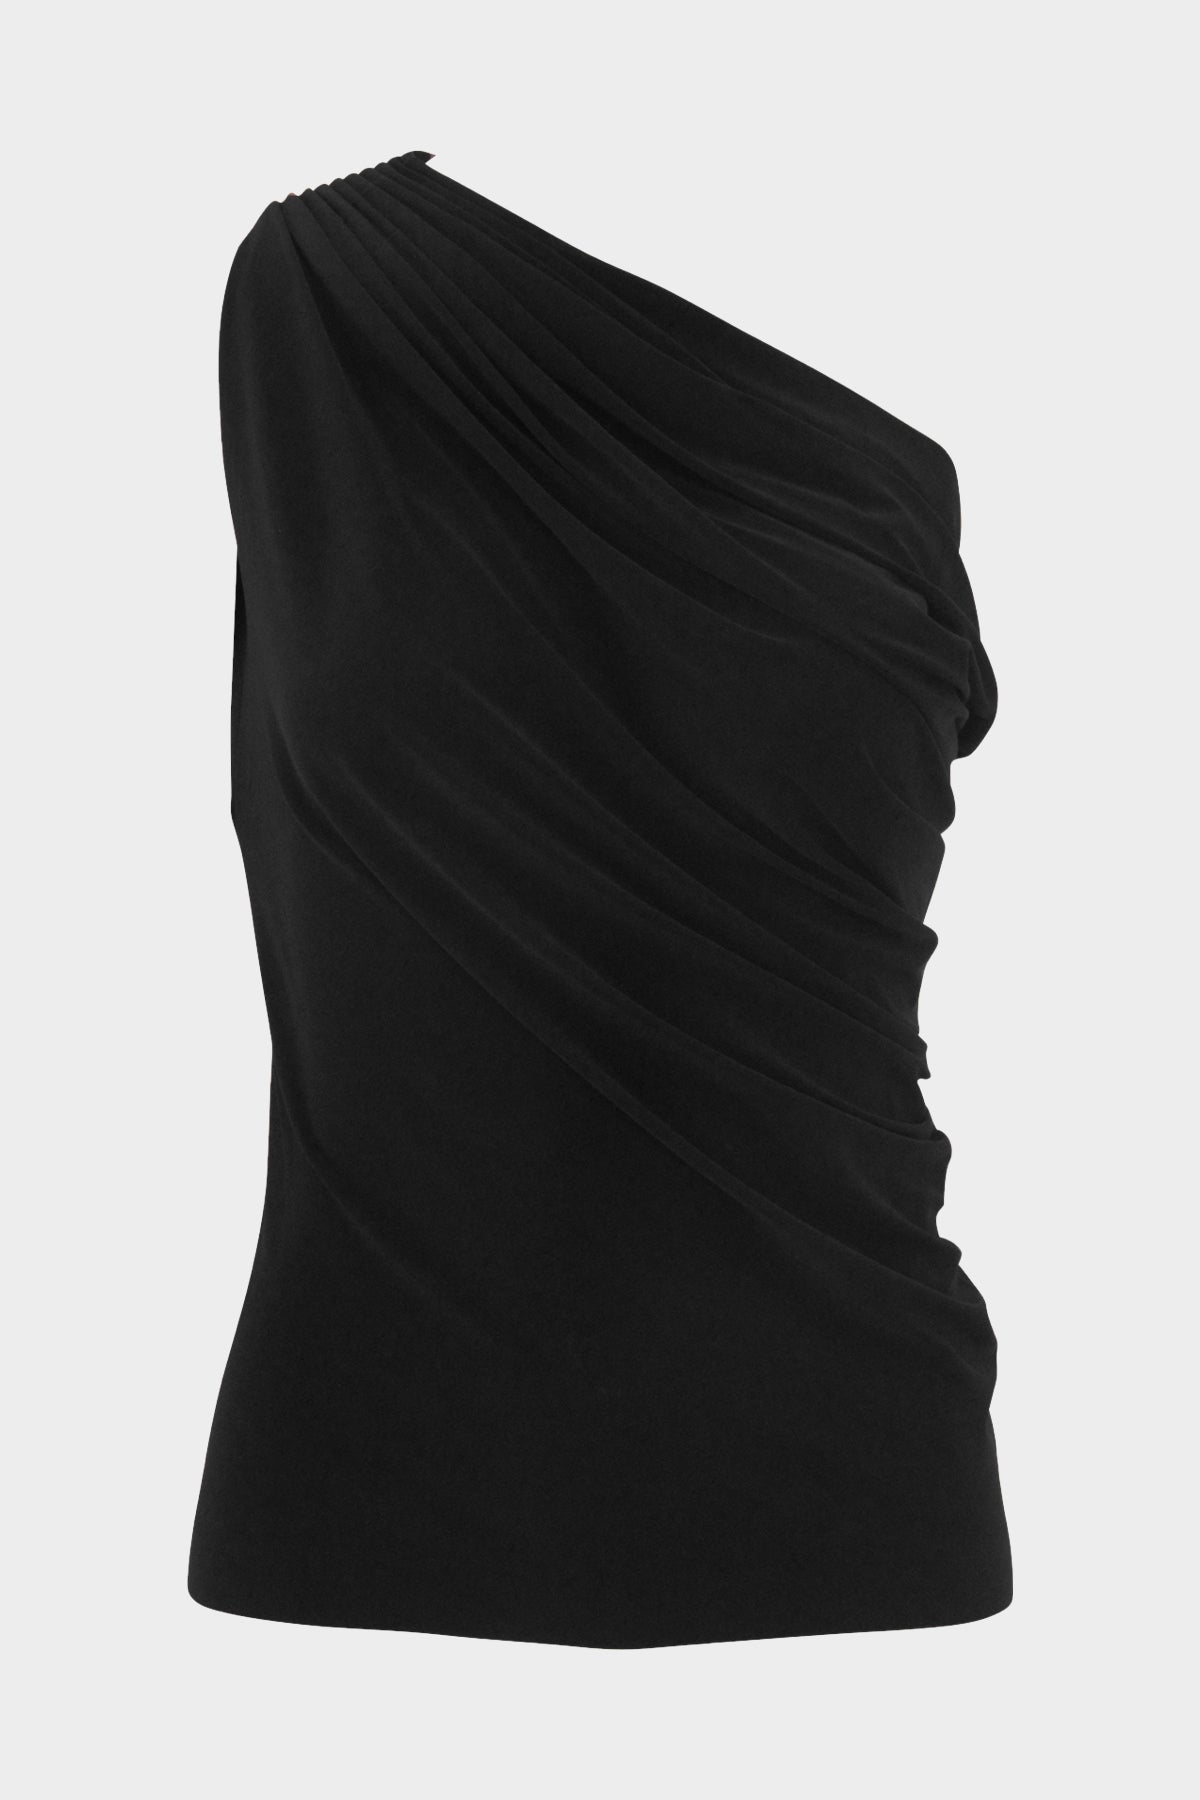 One Shoulder Peasant Top in Black - shop-olivia.com